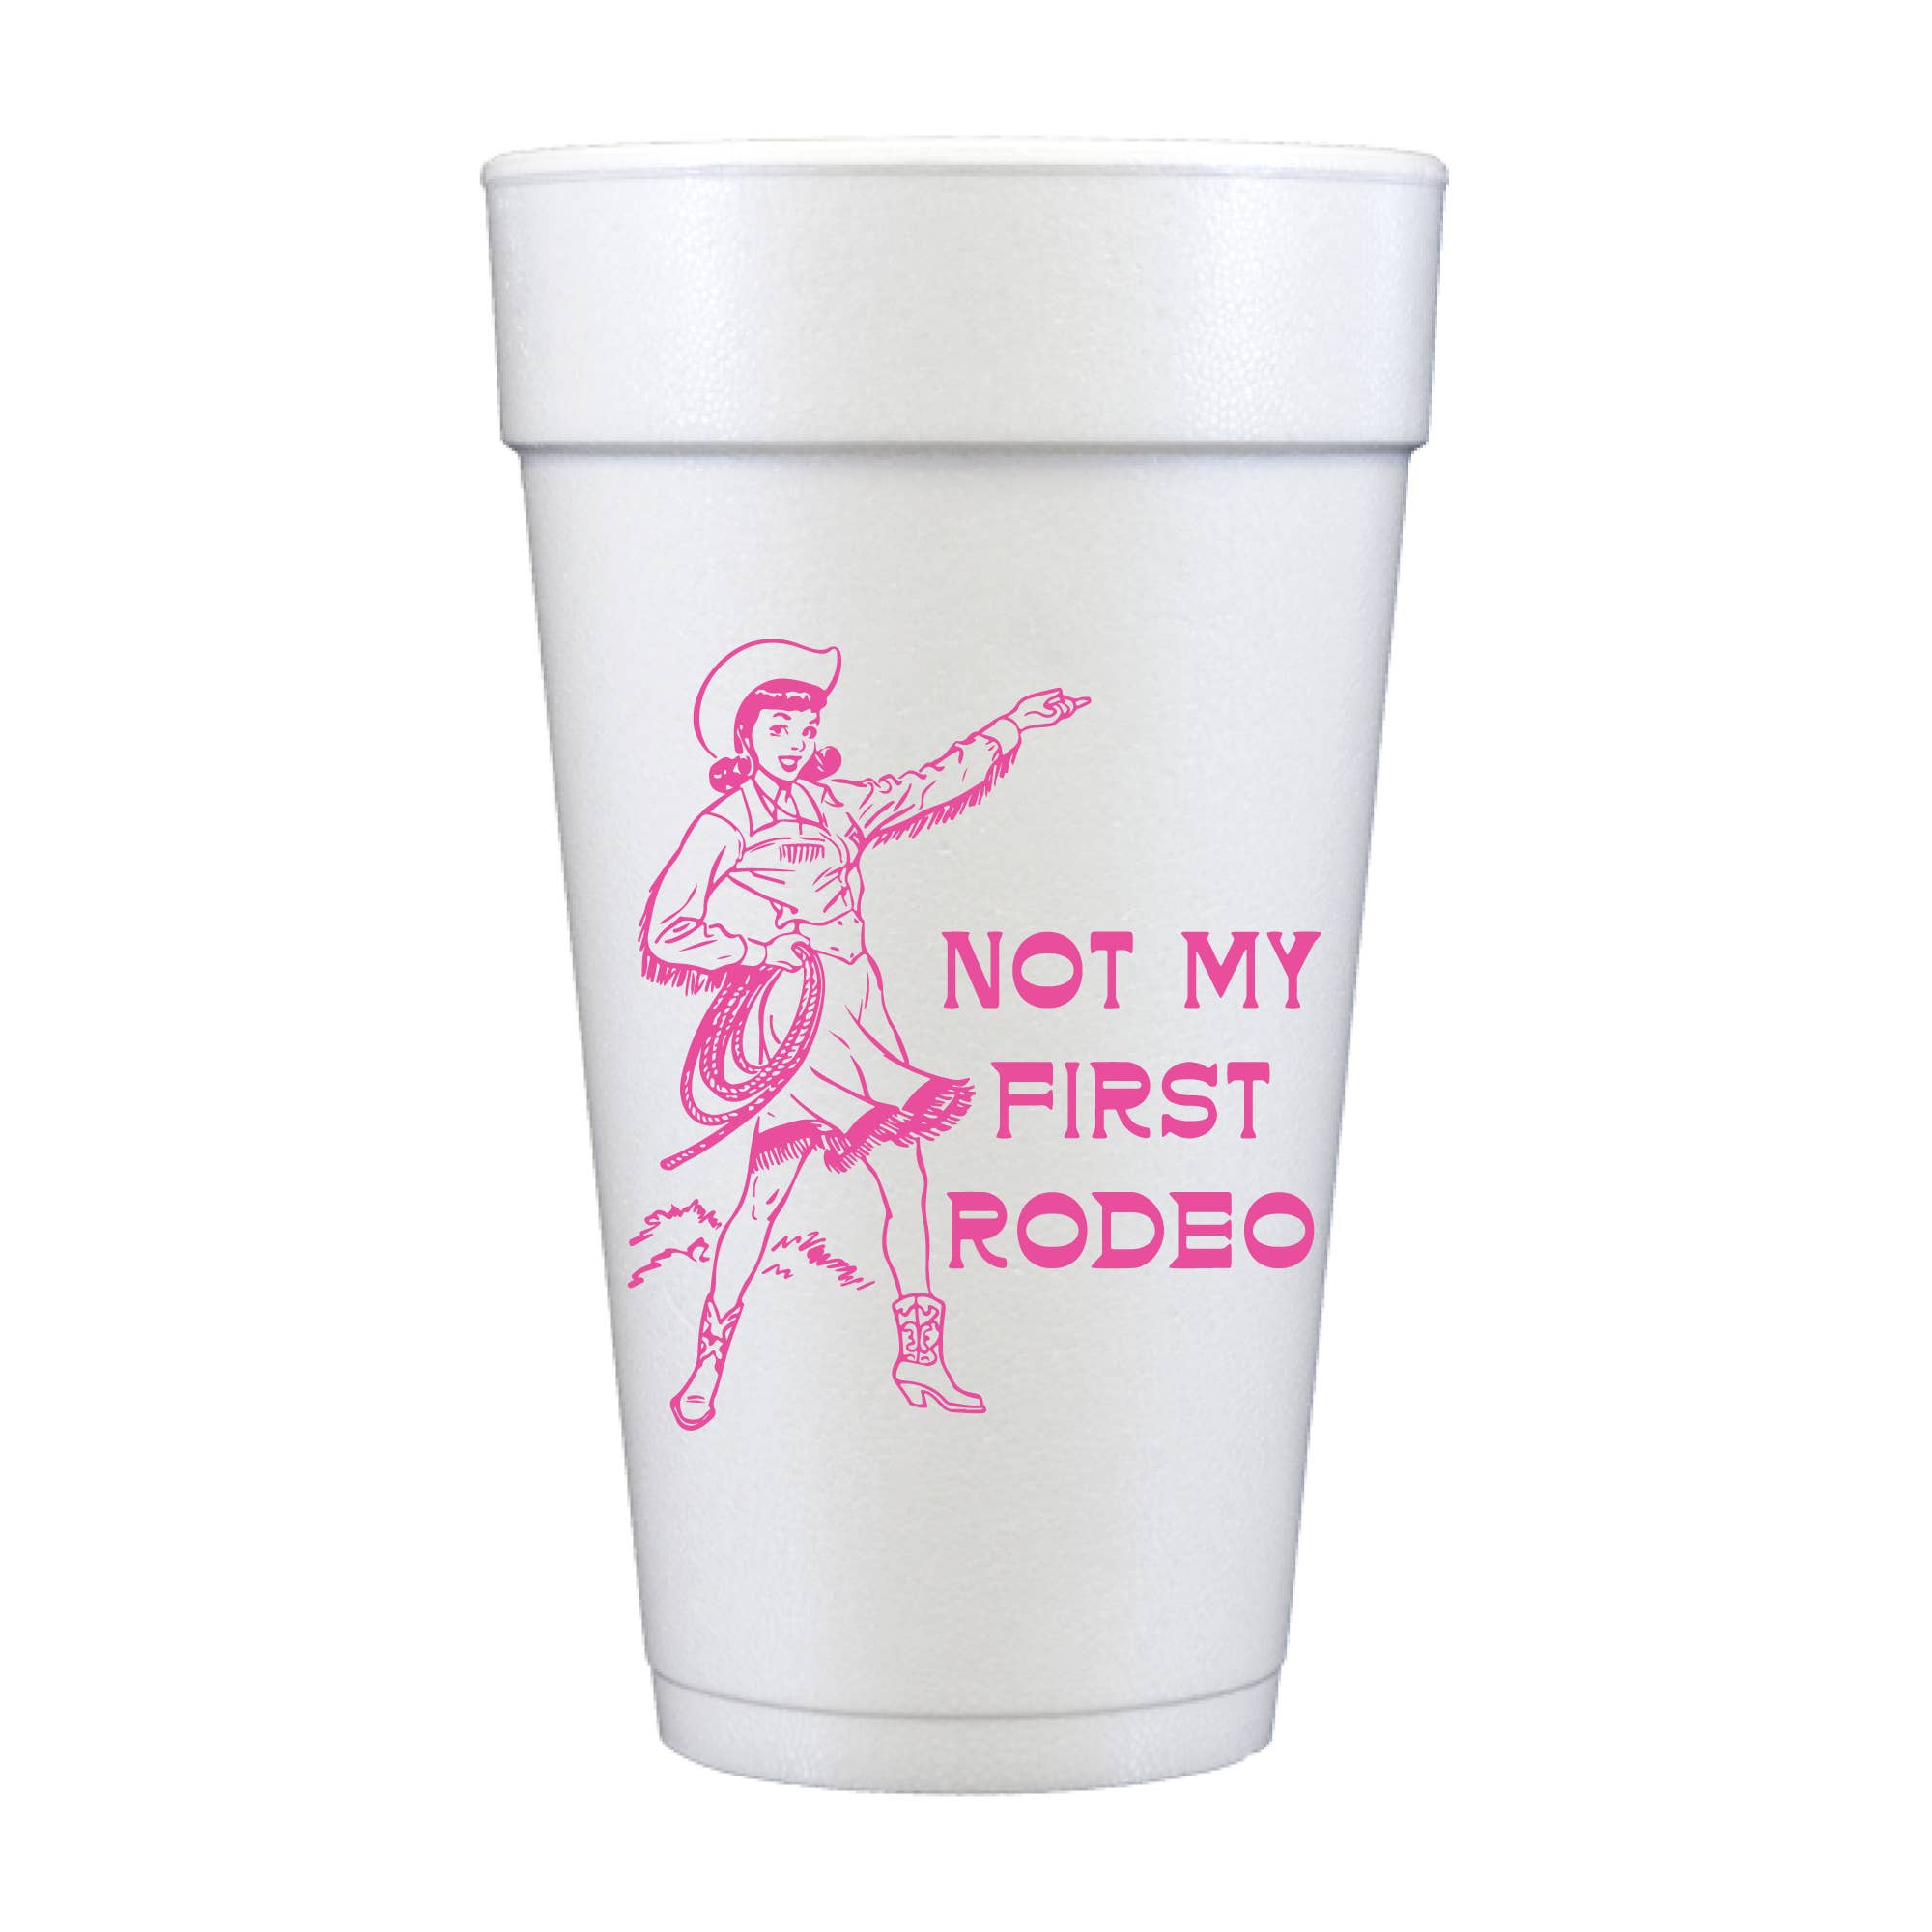 Not My First Rodeo - Foam Cups